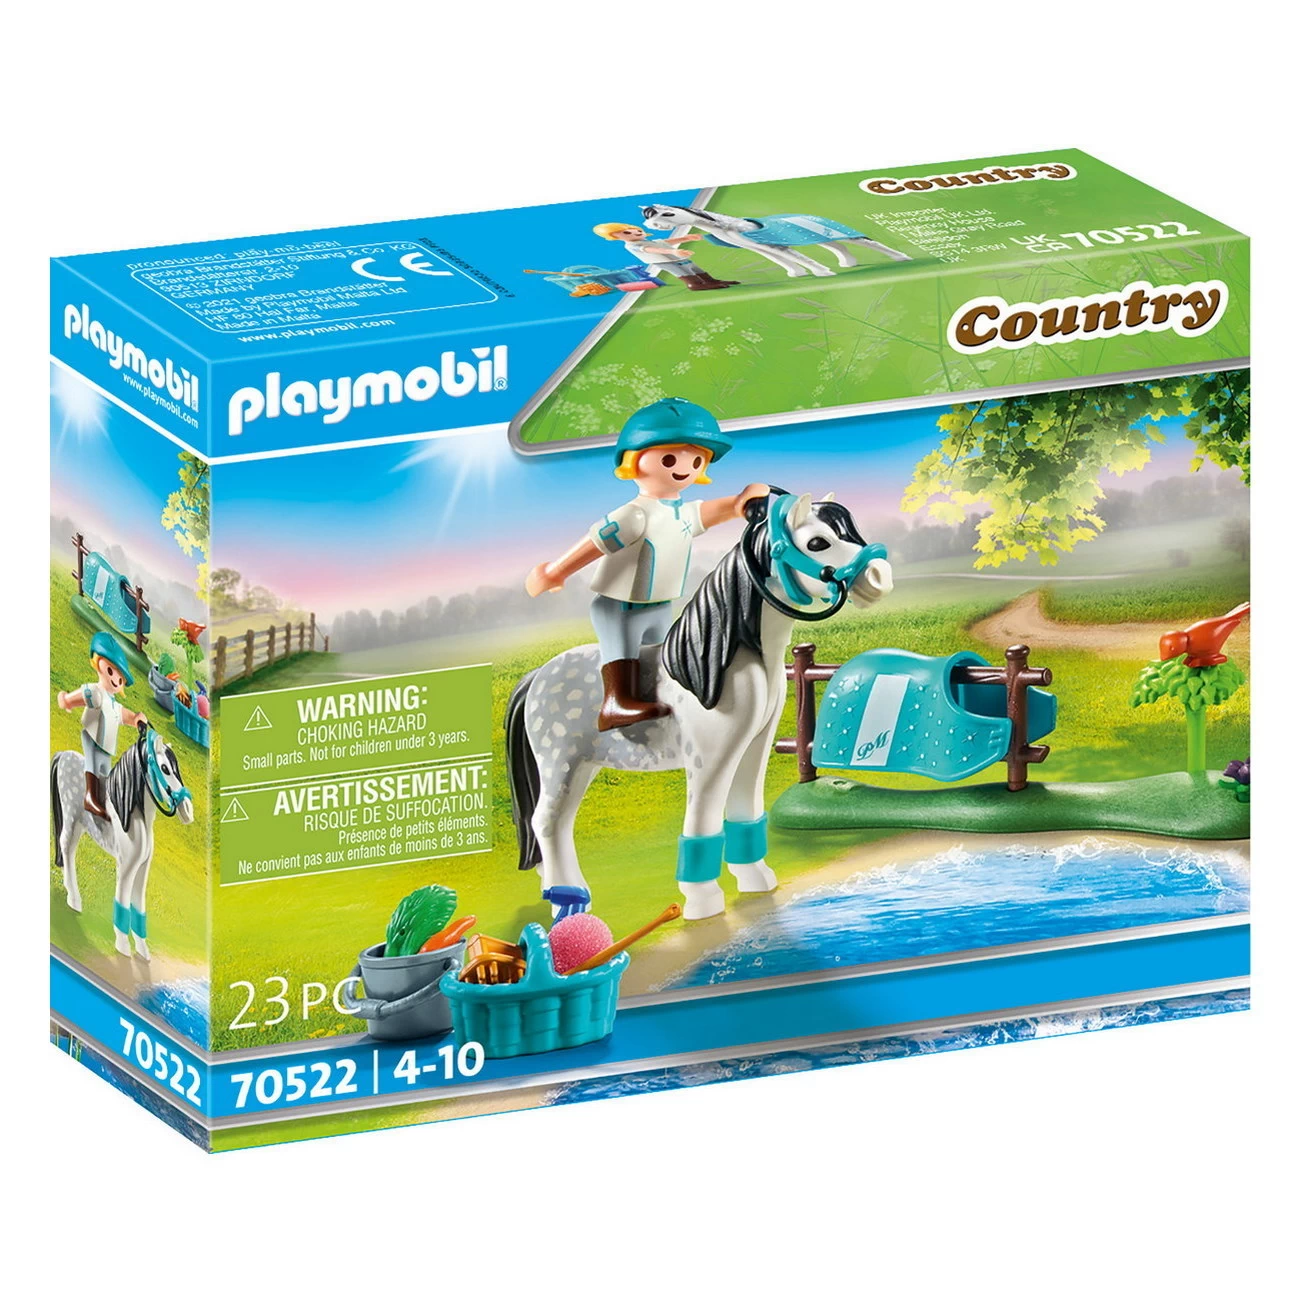 Playmobil 70522 - Sammelpony Classic (Country)